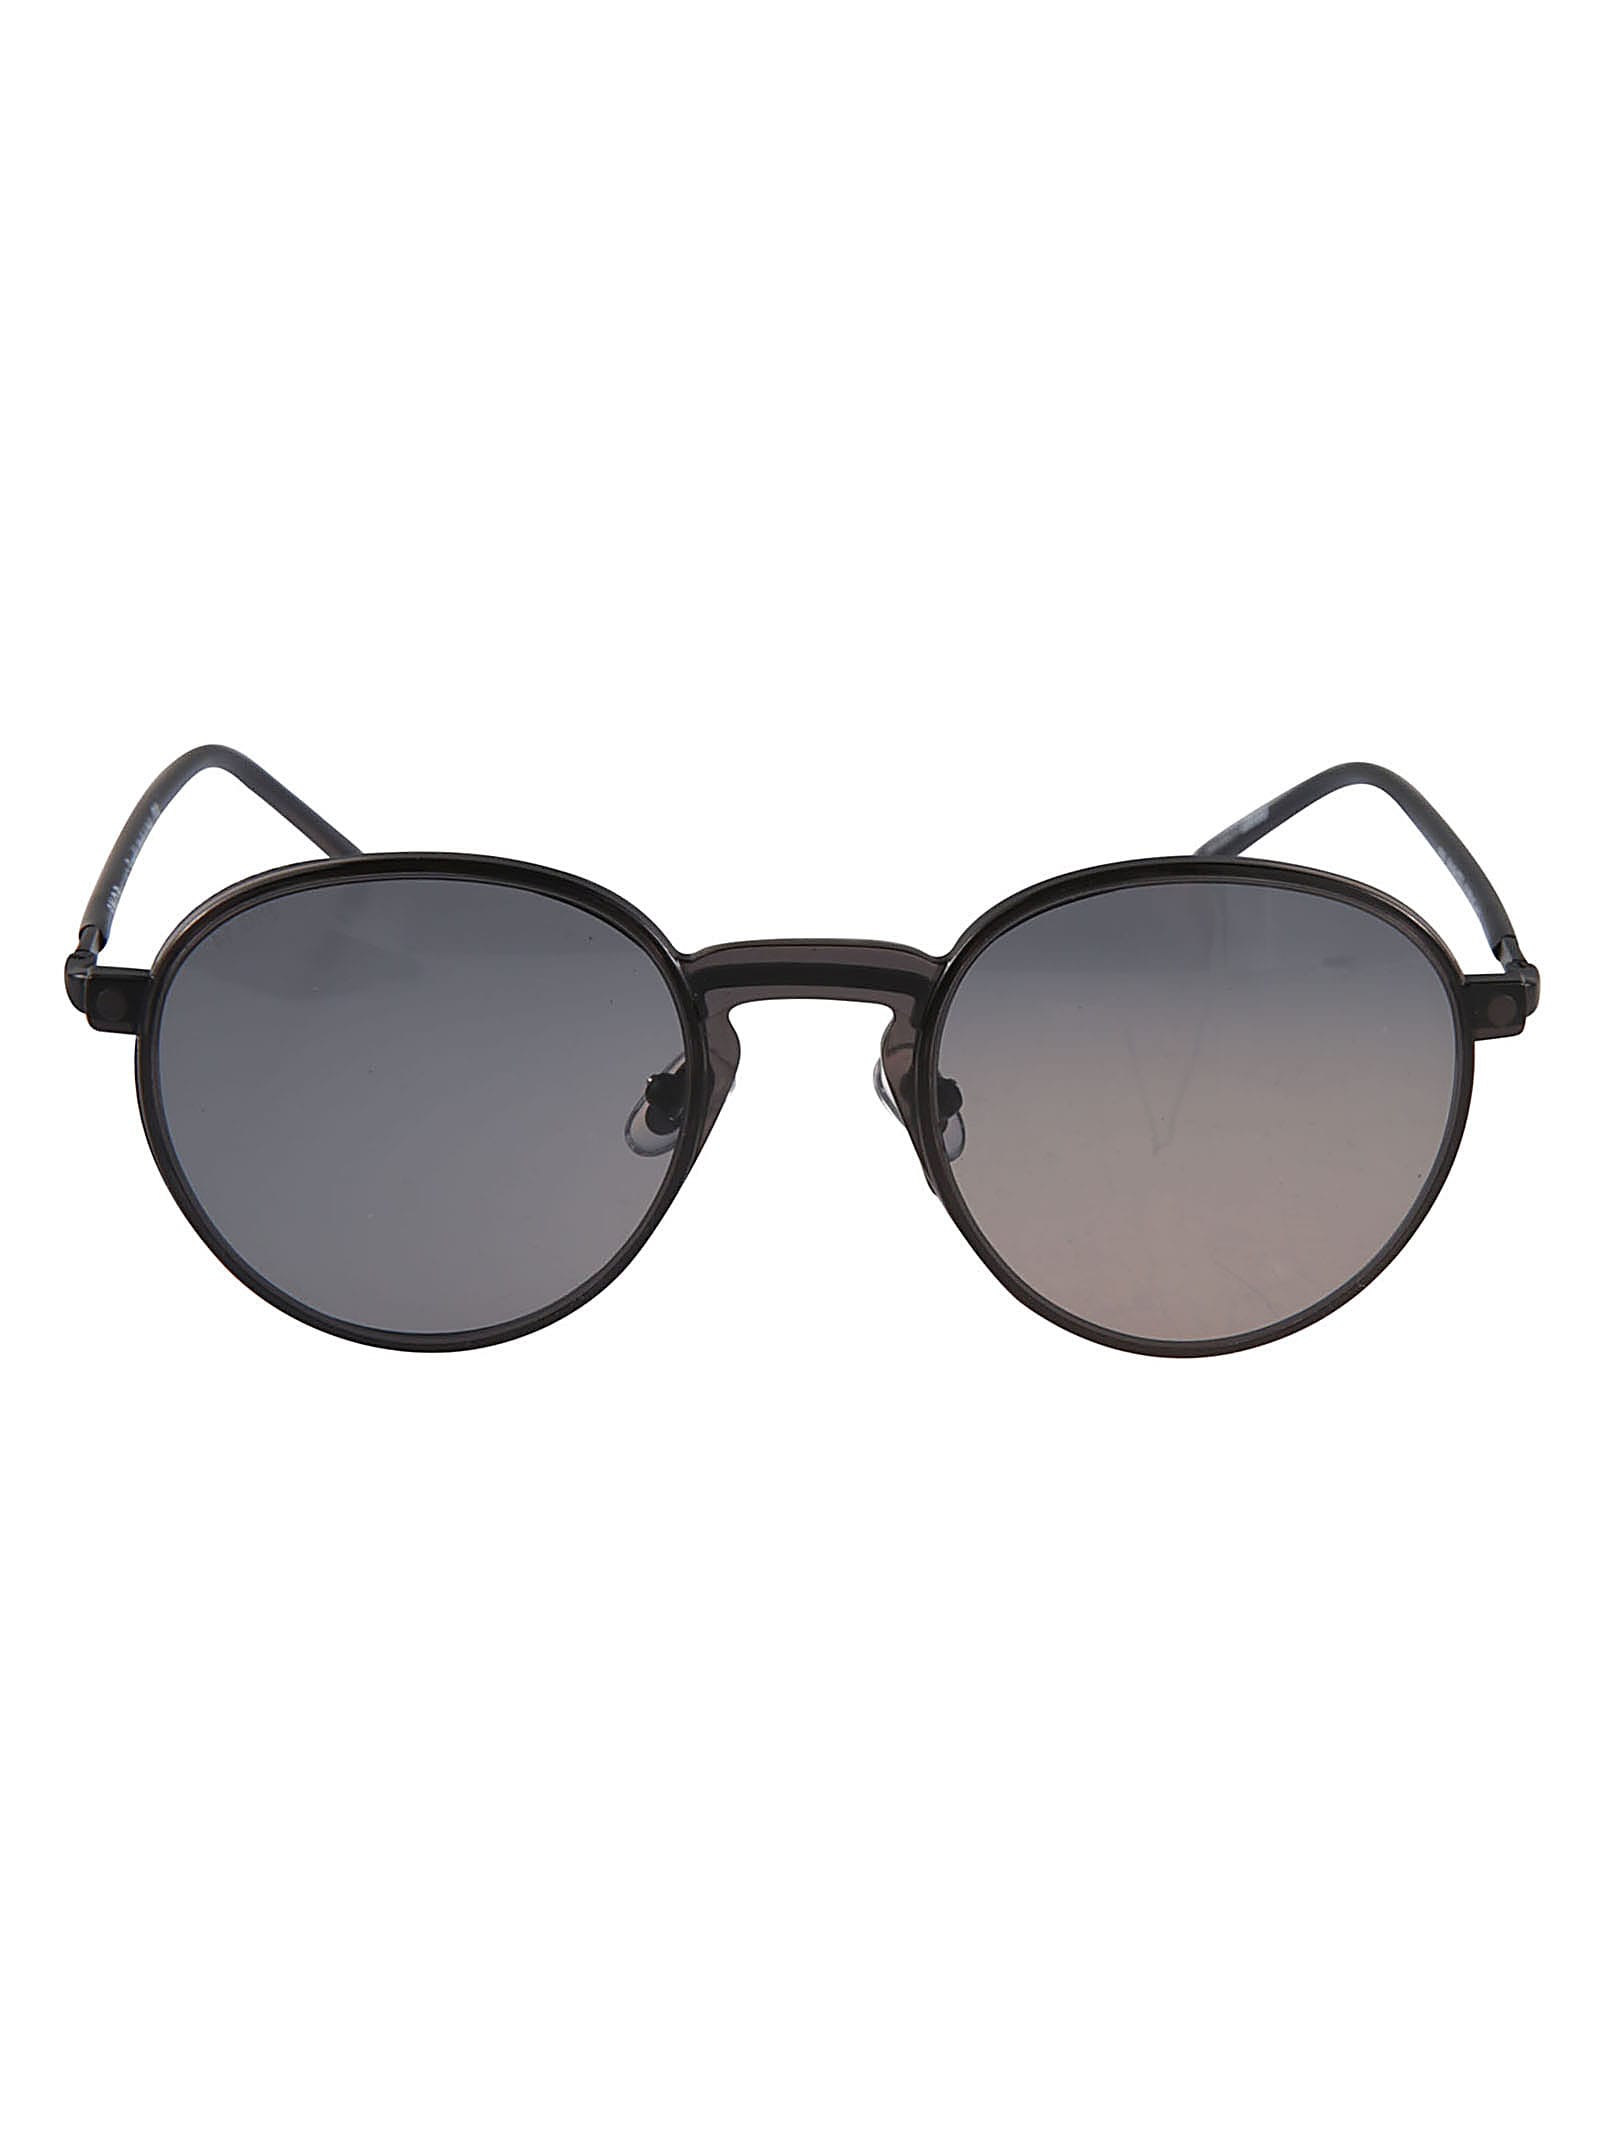 Snob Milano Round Frame Removable Lens Sunglasses